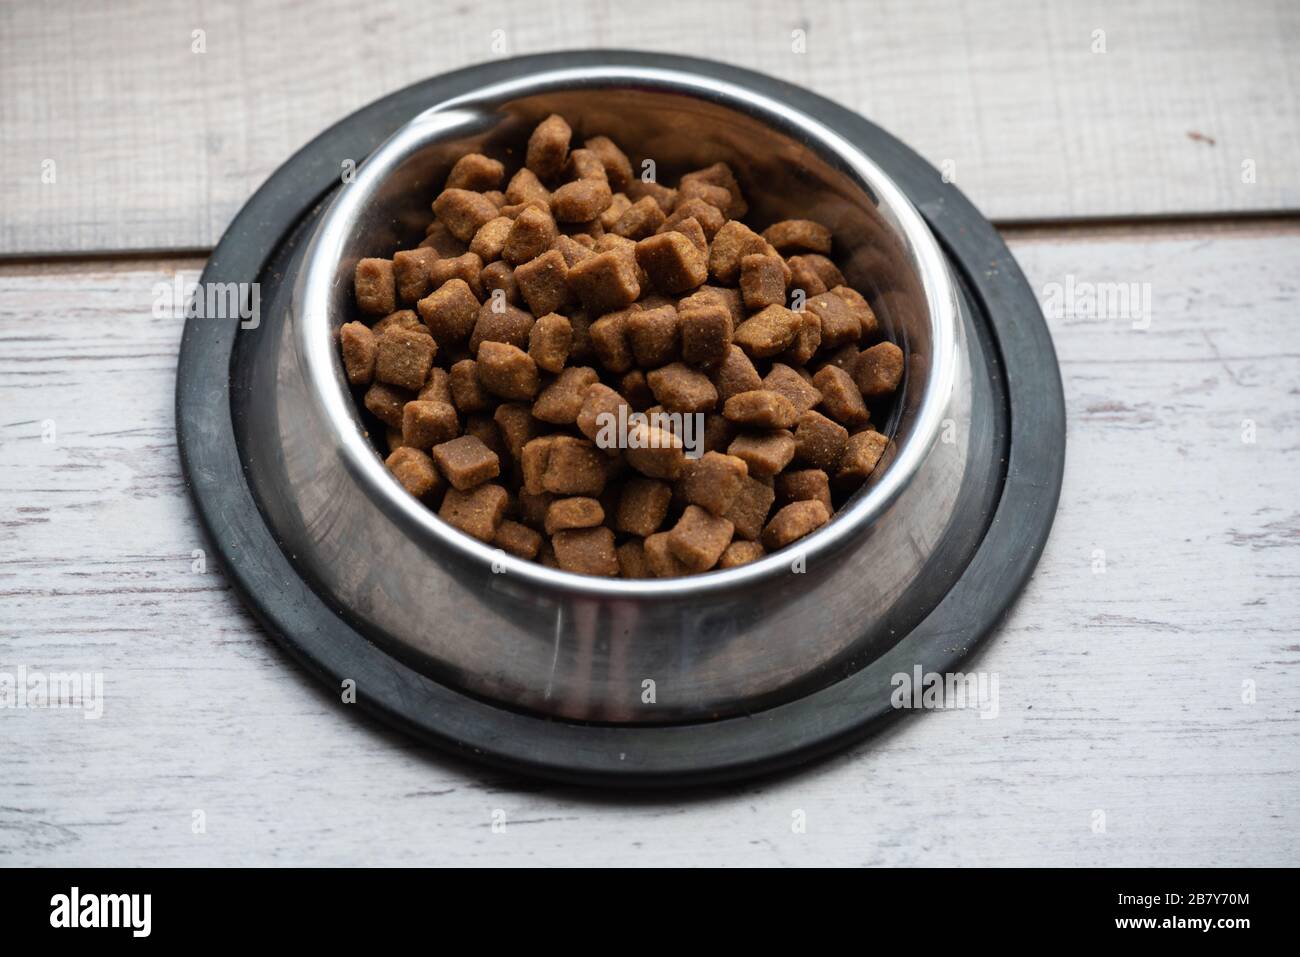 dog food plate